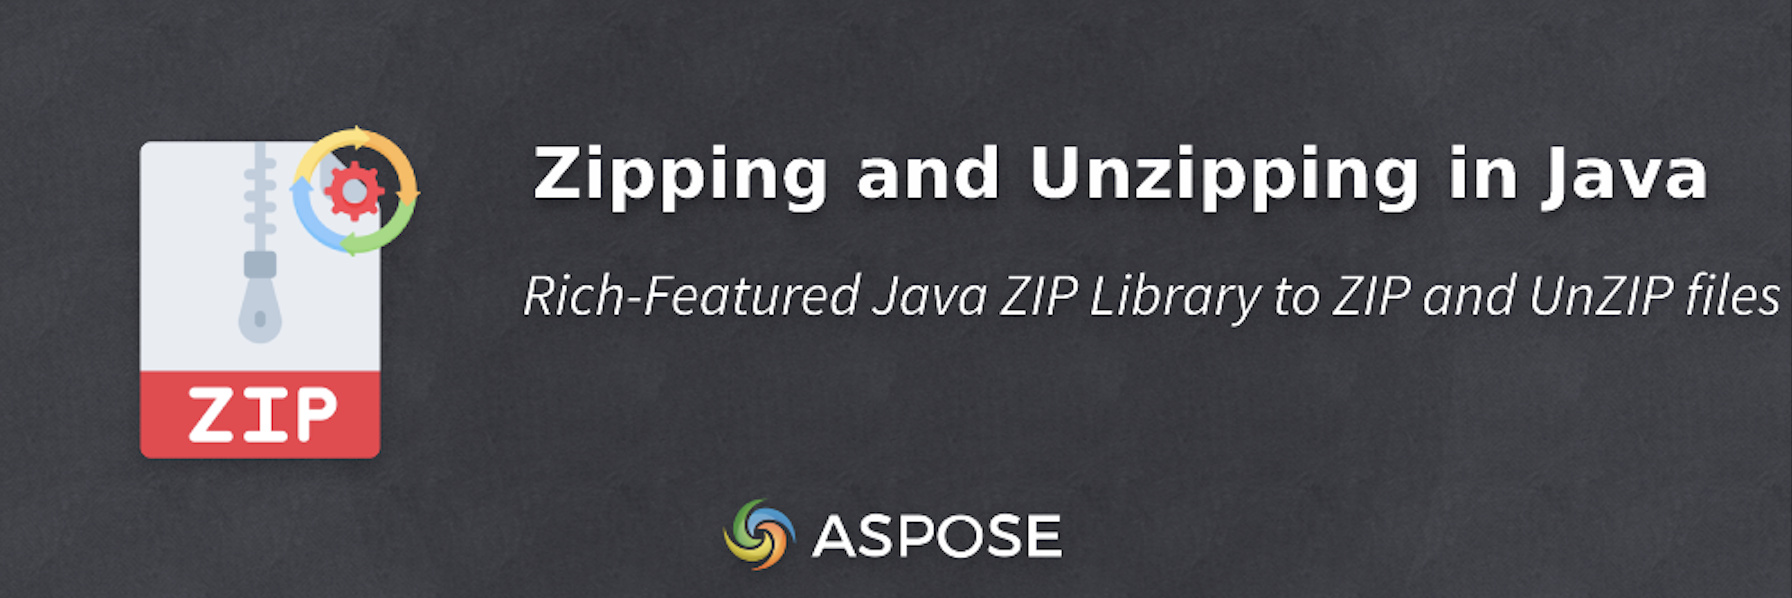 Zipping dan Unzipping di Java - Java ZIP Library